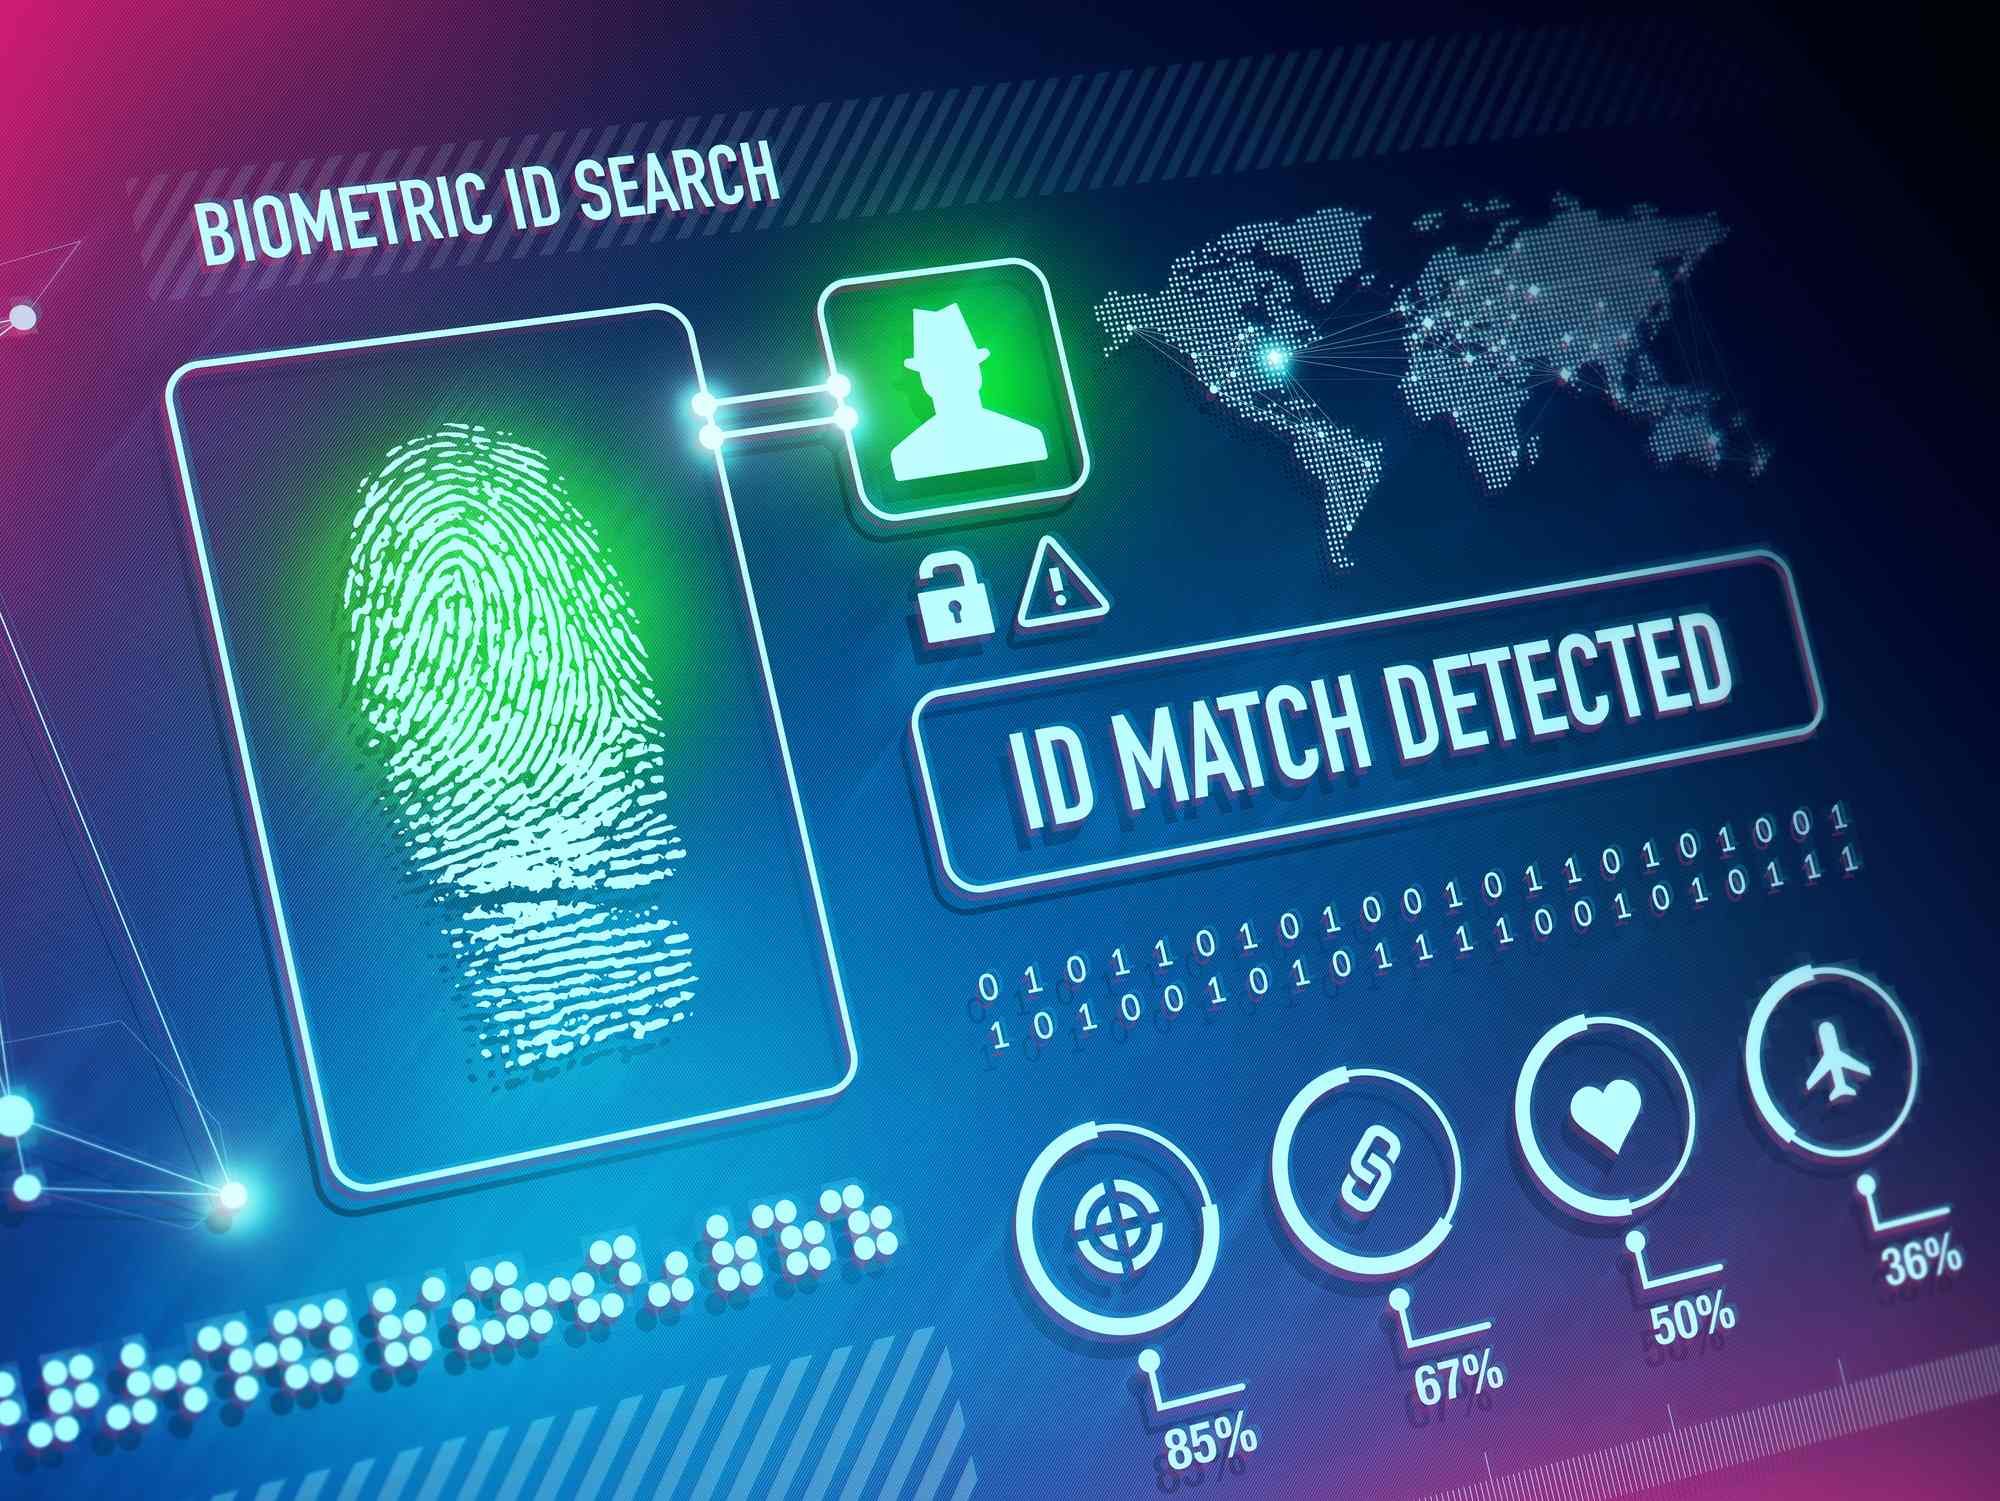 biometric Illinois ID search